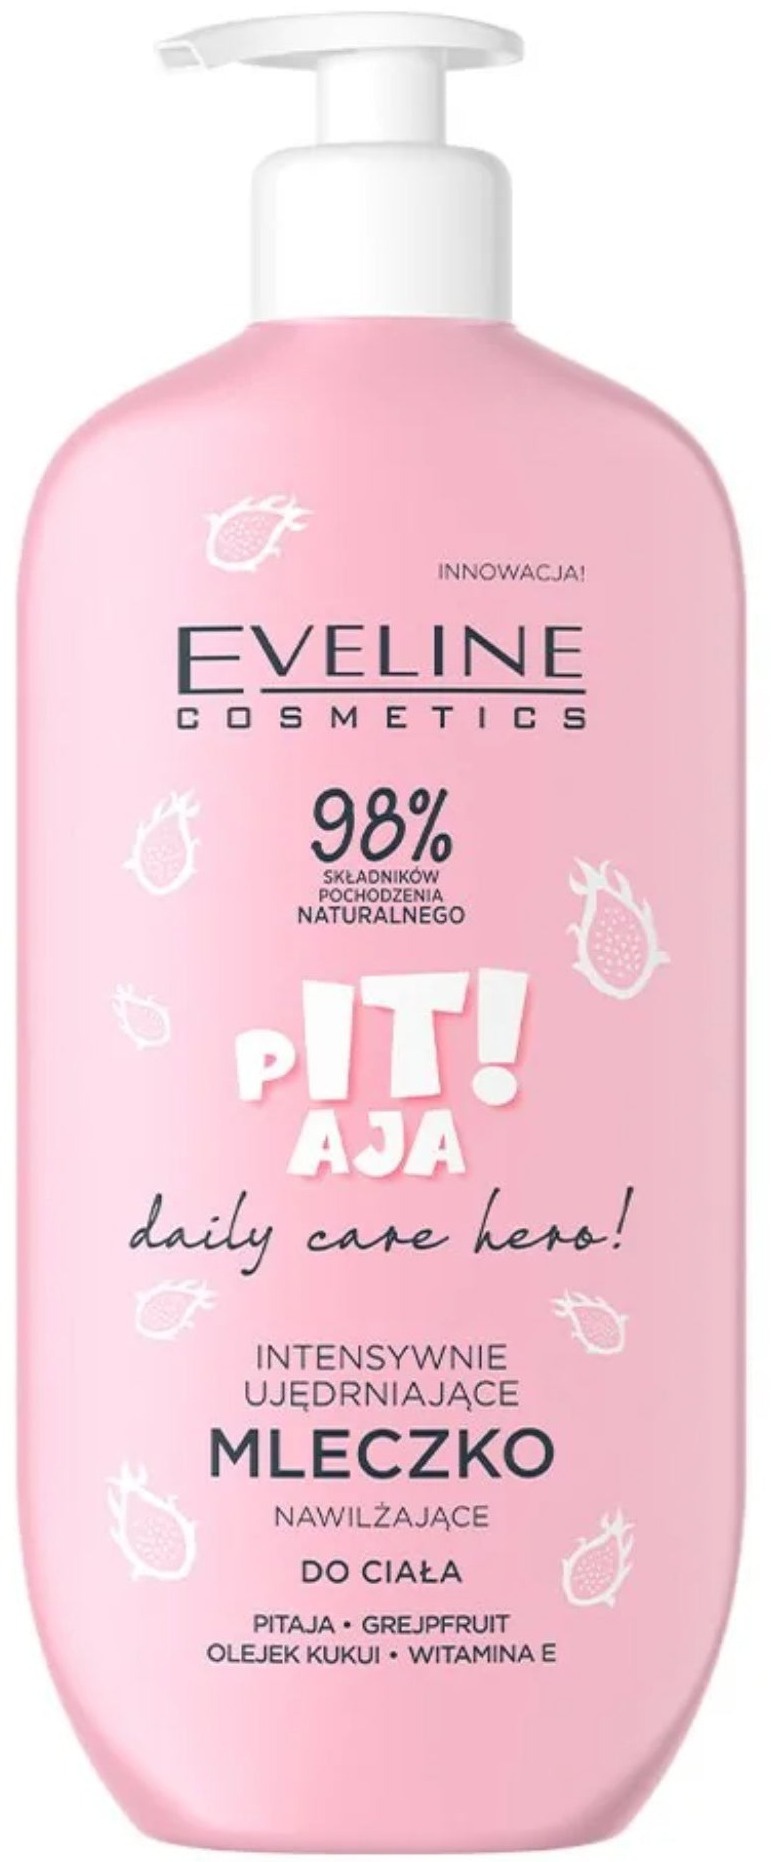 Eveline Daily Care Hero Pitaya Intensively Firming And Moisturizing Body Milk